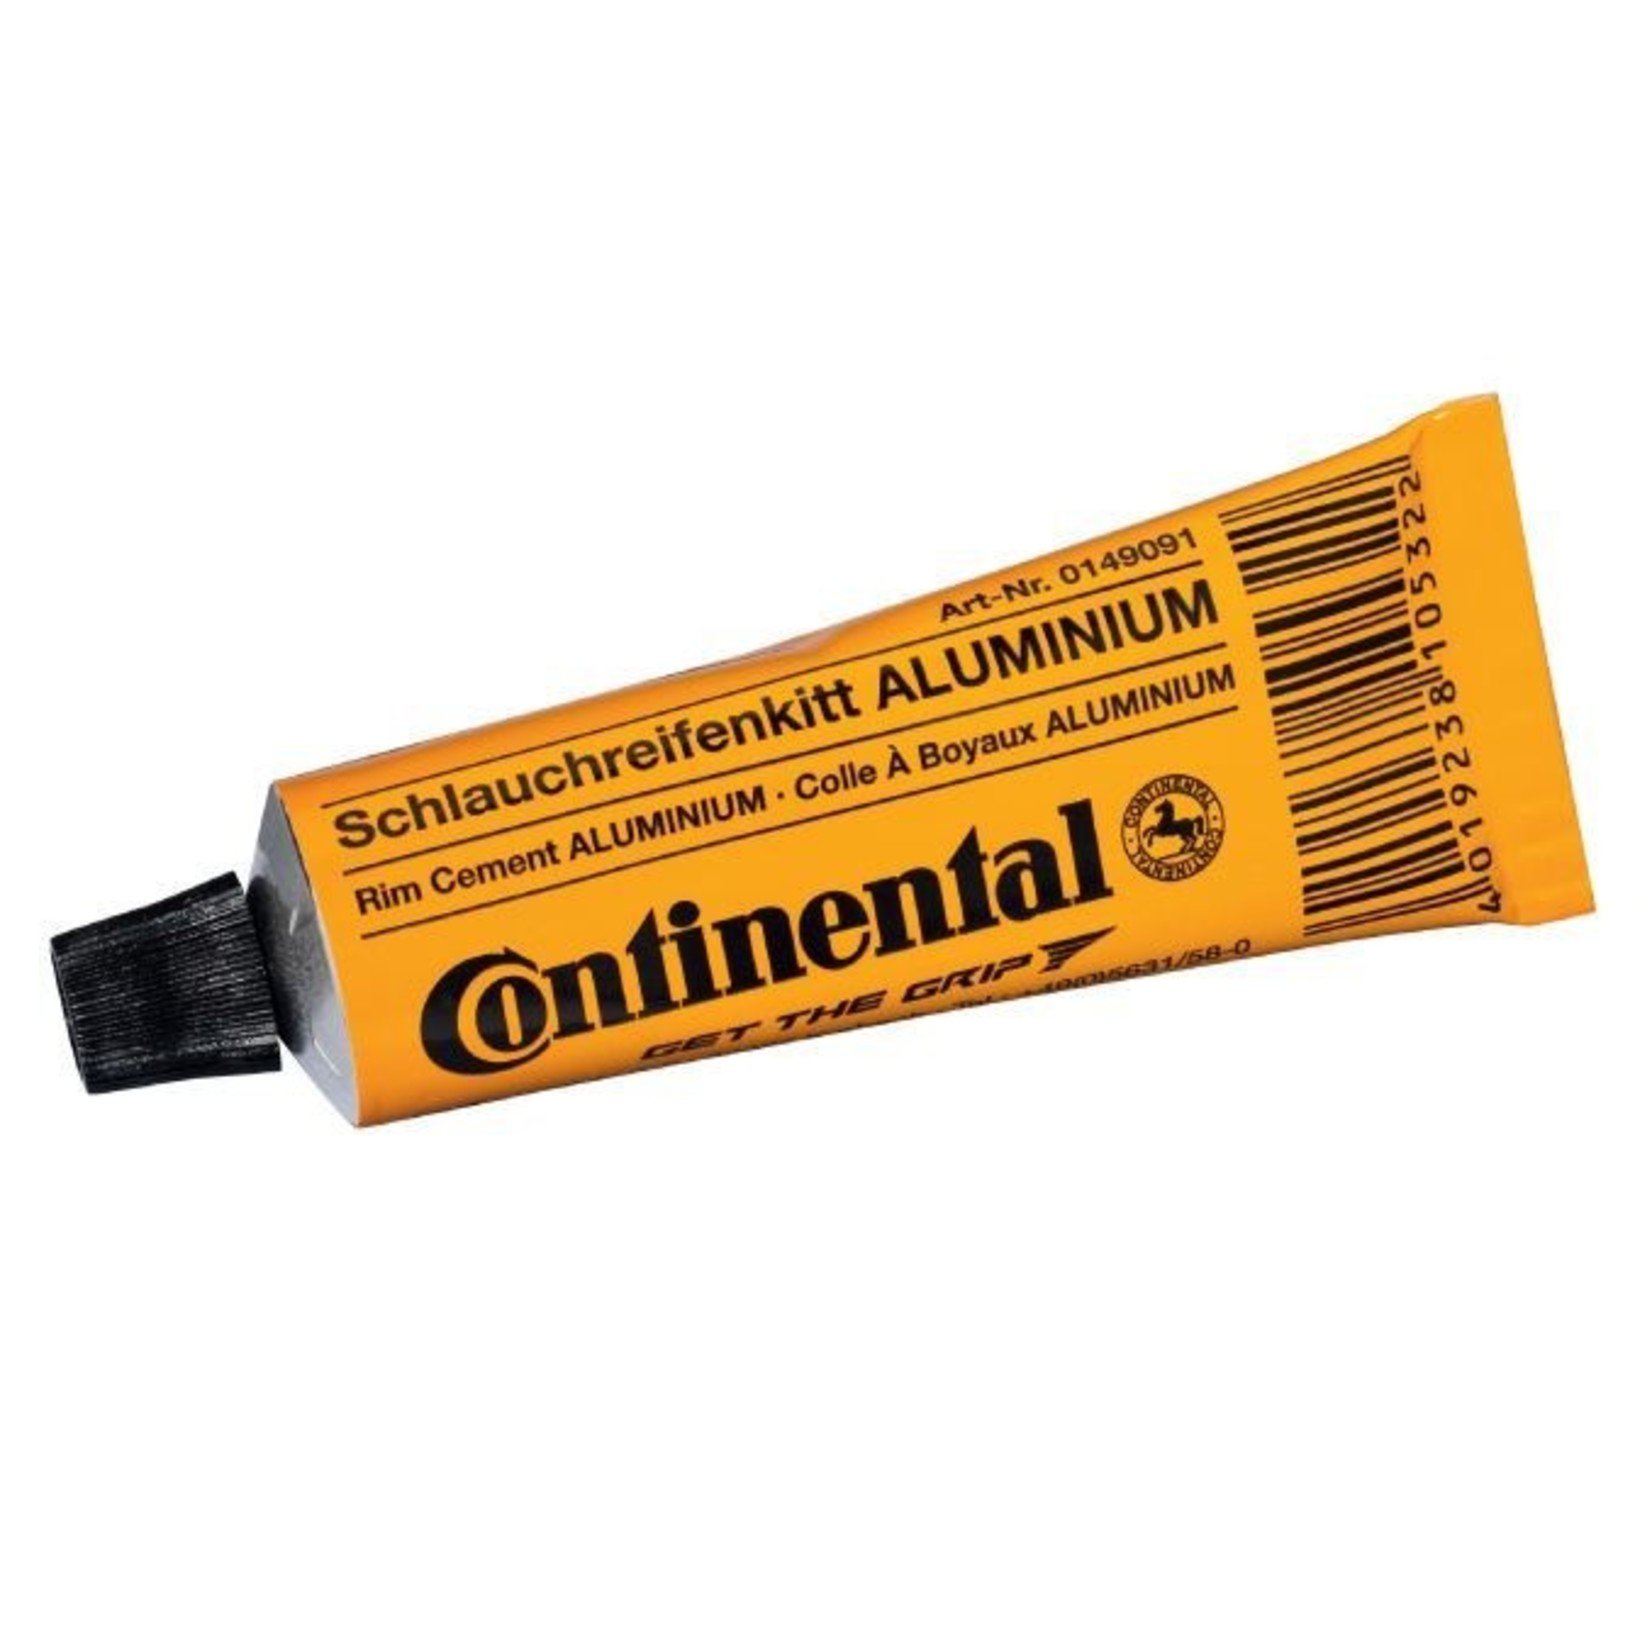 Continental Continental Tubular Cement For Aluminium Rims 25g